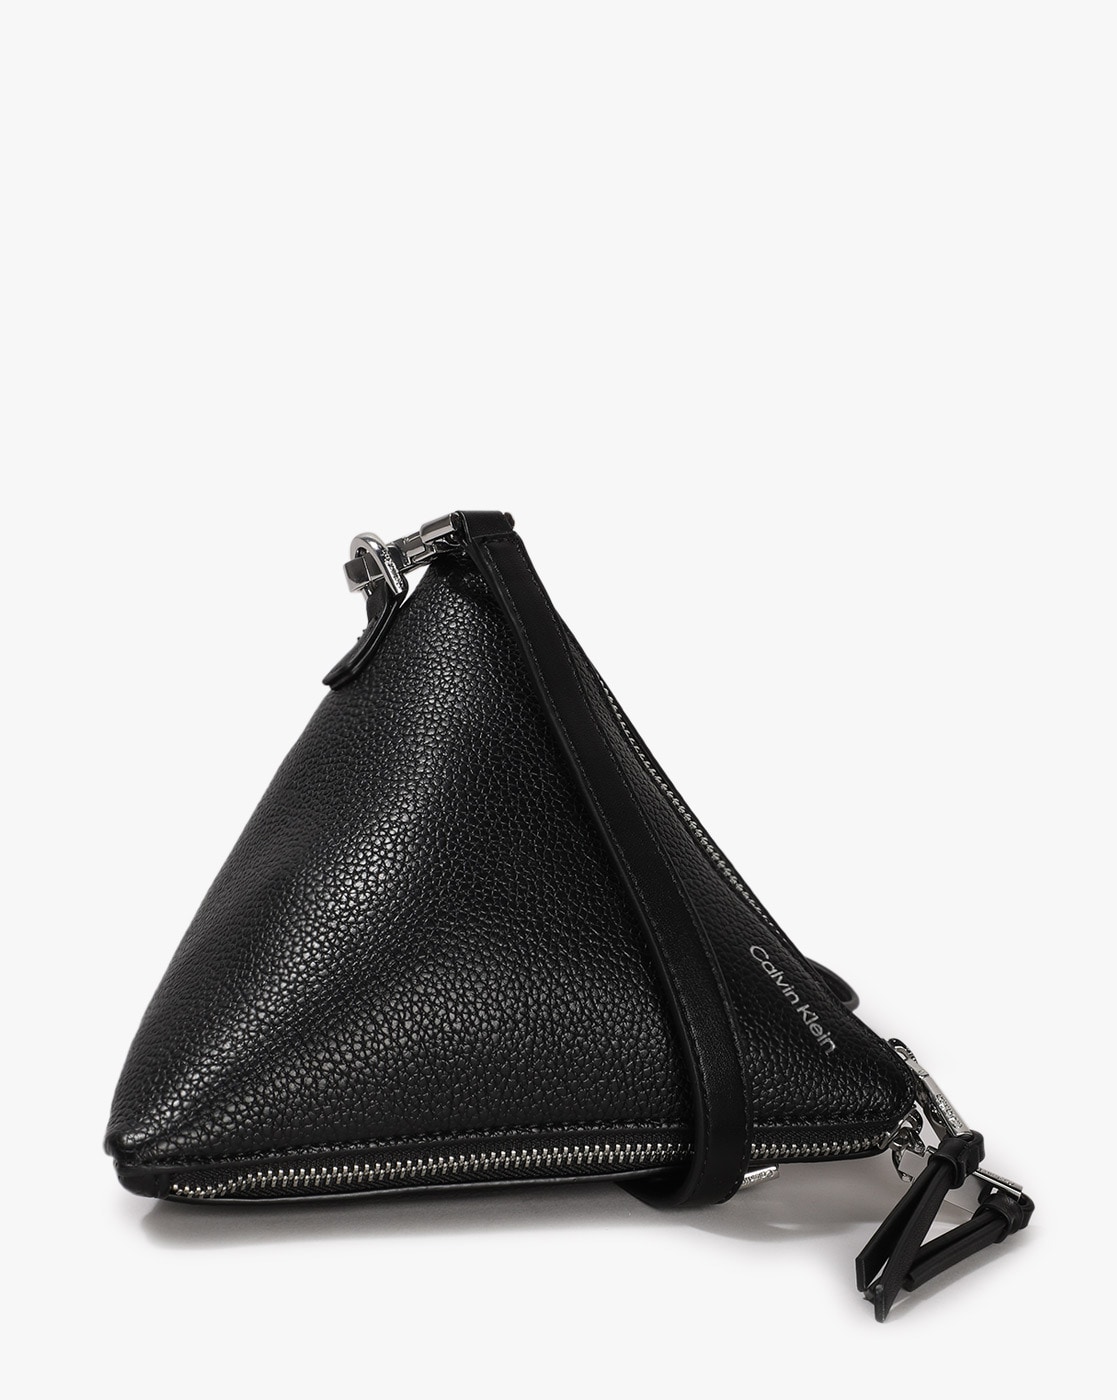 Calvin Klein Bella Novelty Crossbody, Black/Silver Multi: Handbags:  Amazon.com